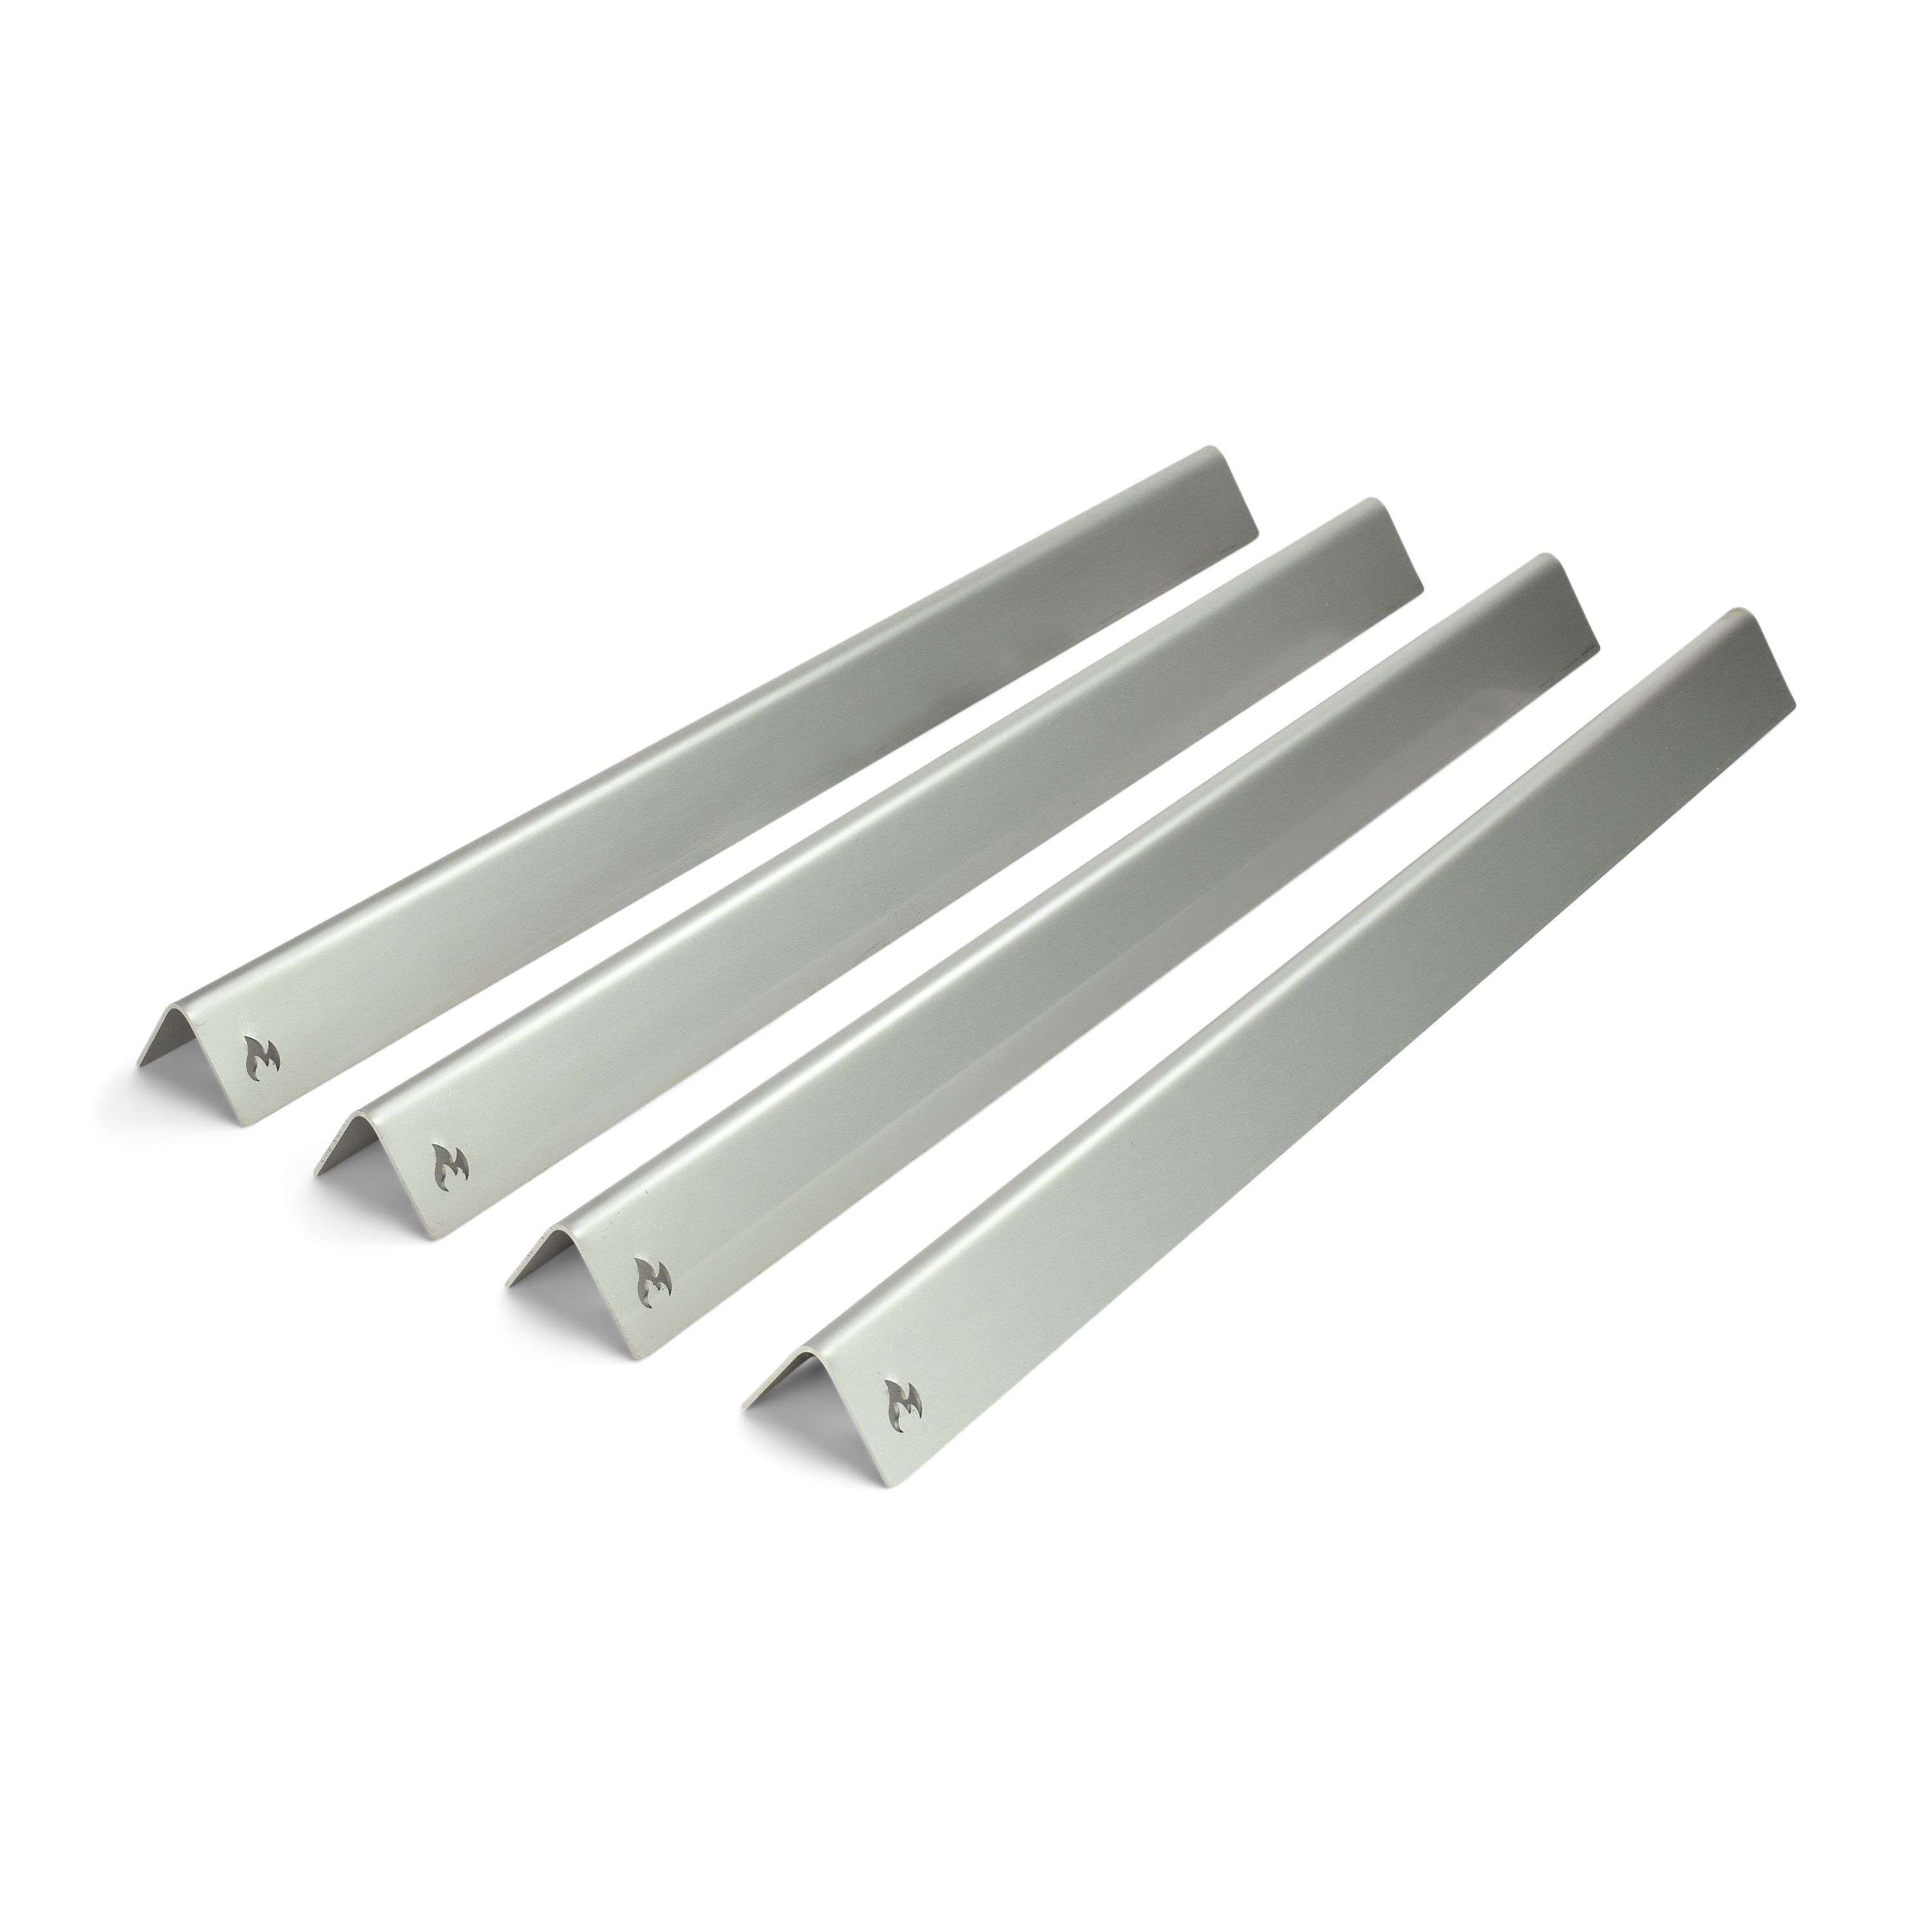 Stainless steel aroma rails for Weber